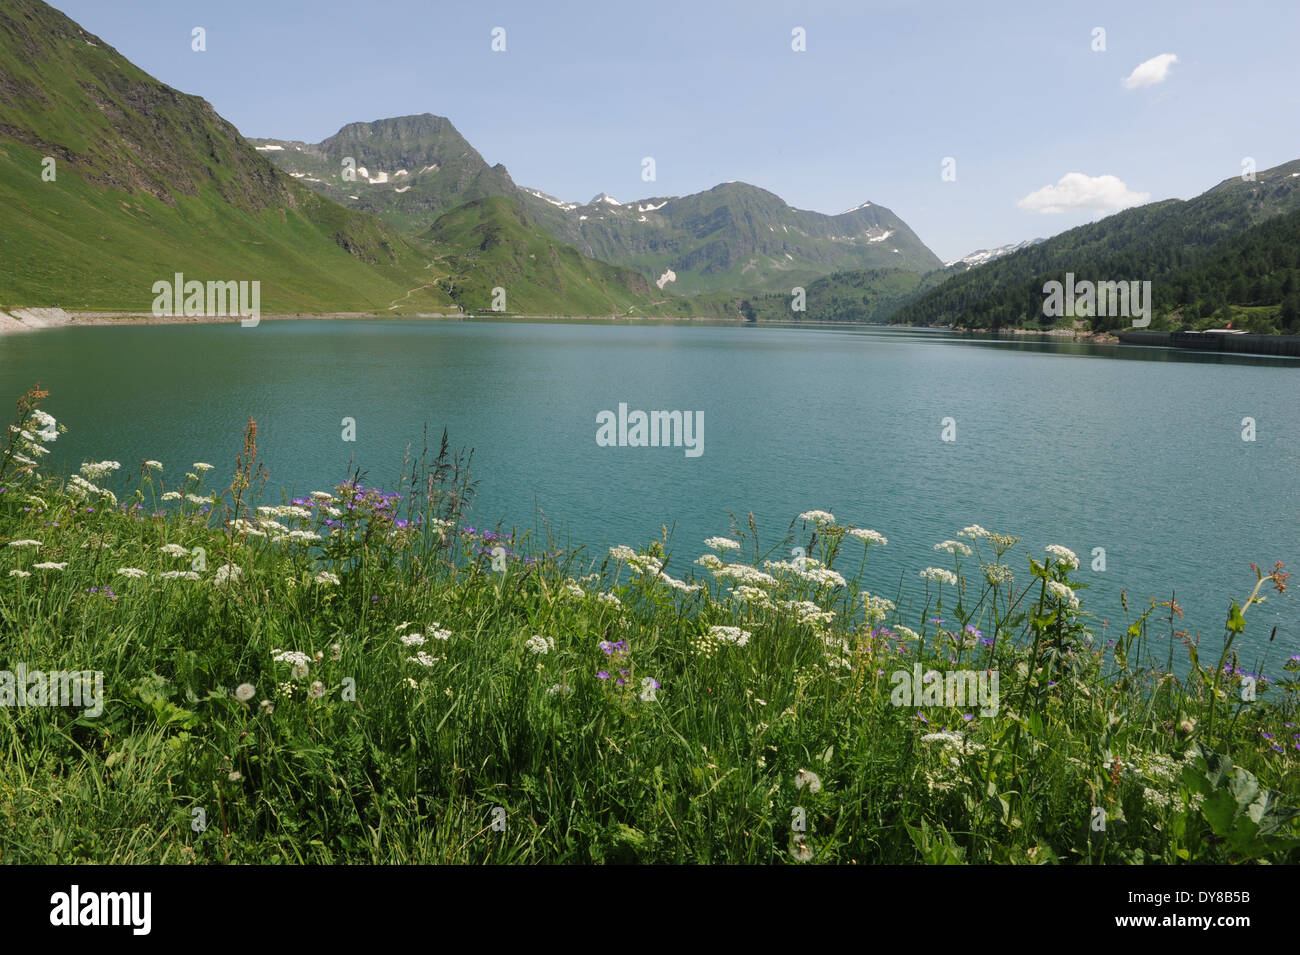 Switzerland, Ticino, Ritom, Piora, meadow, lake, alp, meadow, Stock Photo